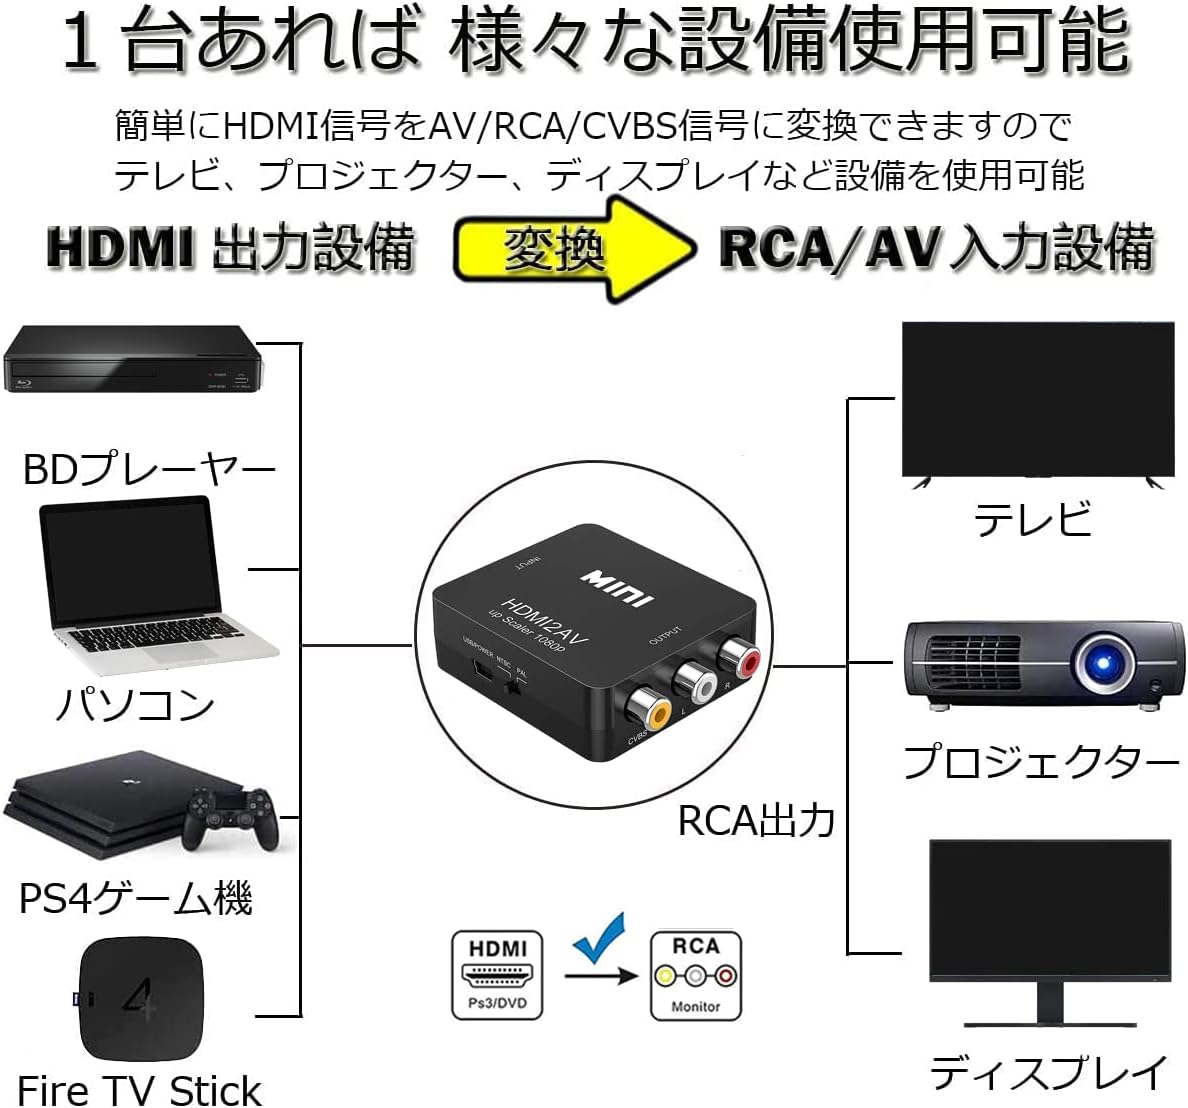 HDMI to RCA 変換コンバーター HDMI to AV コンポジット HDMIからアナログに変換アダプタ 1080P 音声出力可 USB給電 Xbox PS4 PS3 カーナビなど対応 3色ケーブル アナログ 3